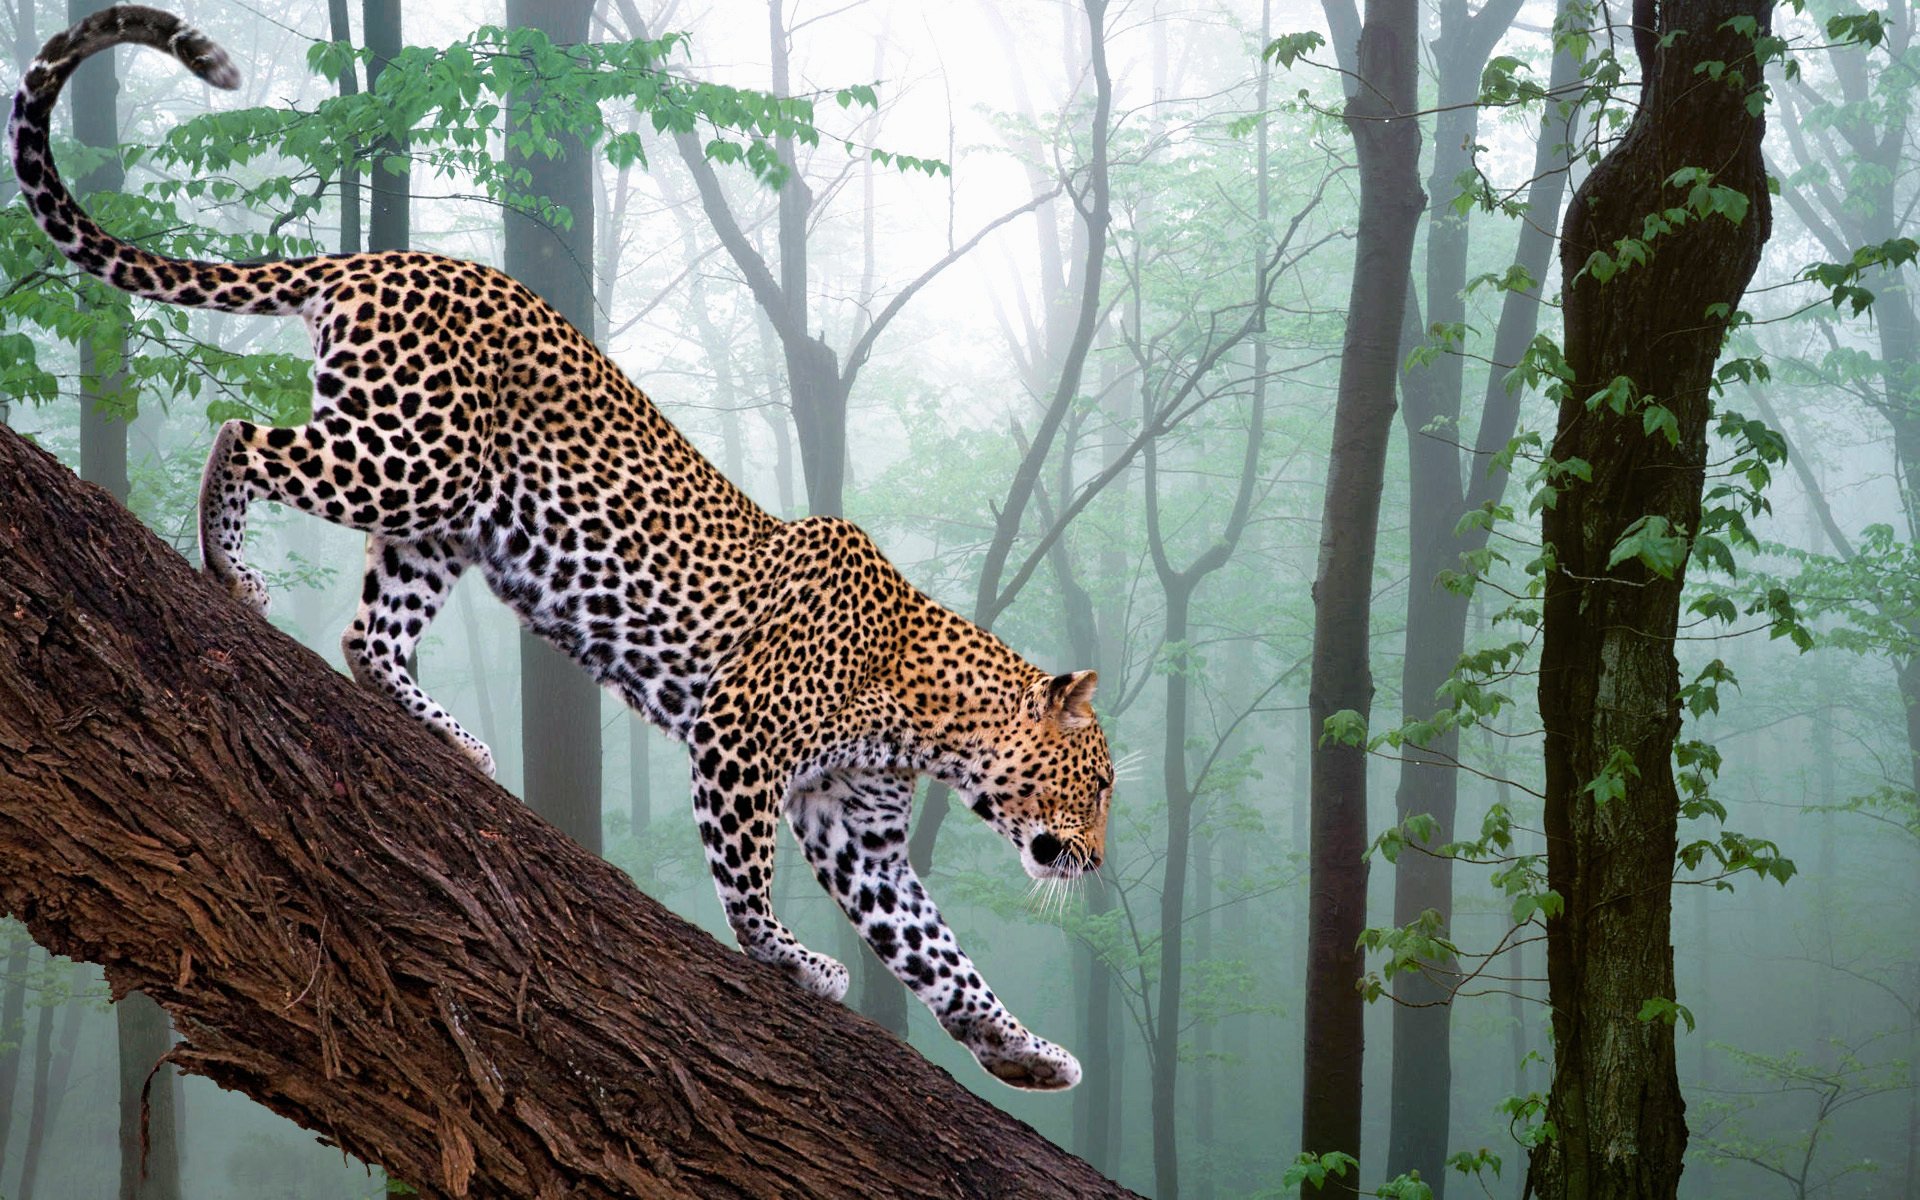 Ягуар тропического леса. Берберийский леопард. Экваториальный лес Ягуар. Гепард леопард Ягуар.